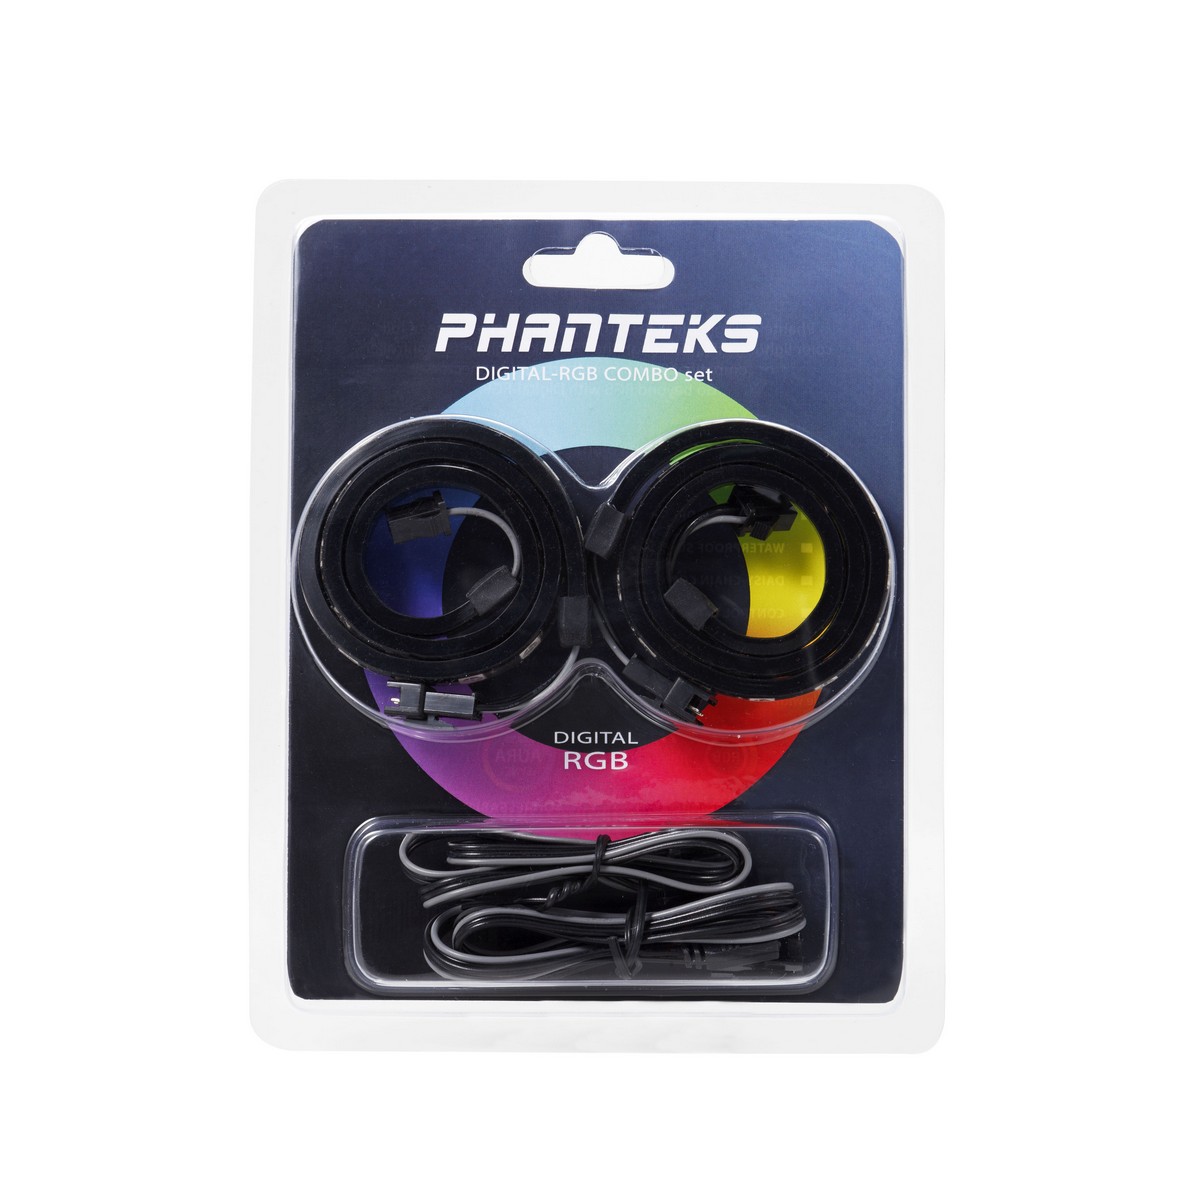 Phanteks - Phanteks Digital RGB LED Strip - Combo Set